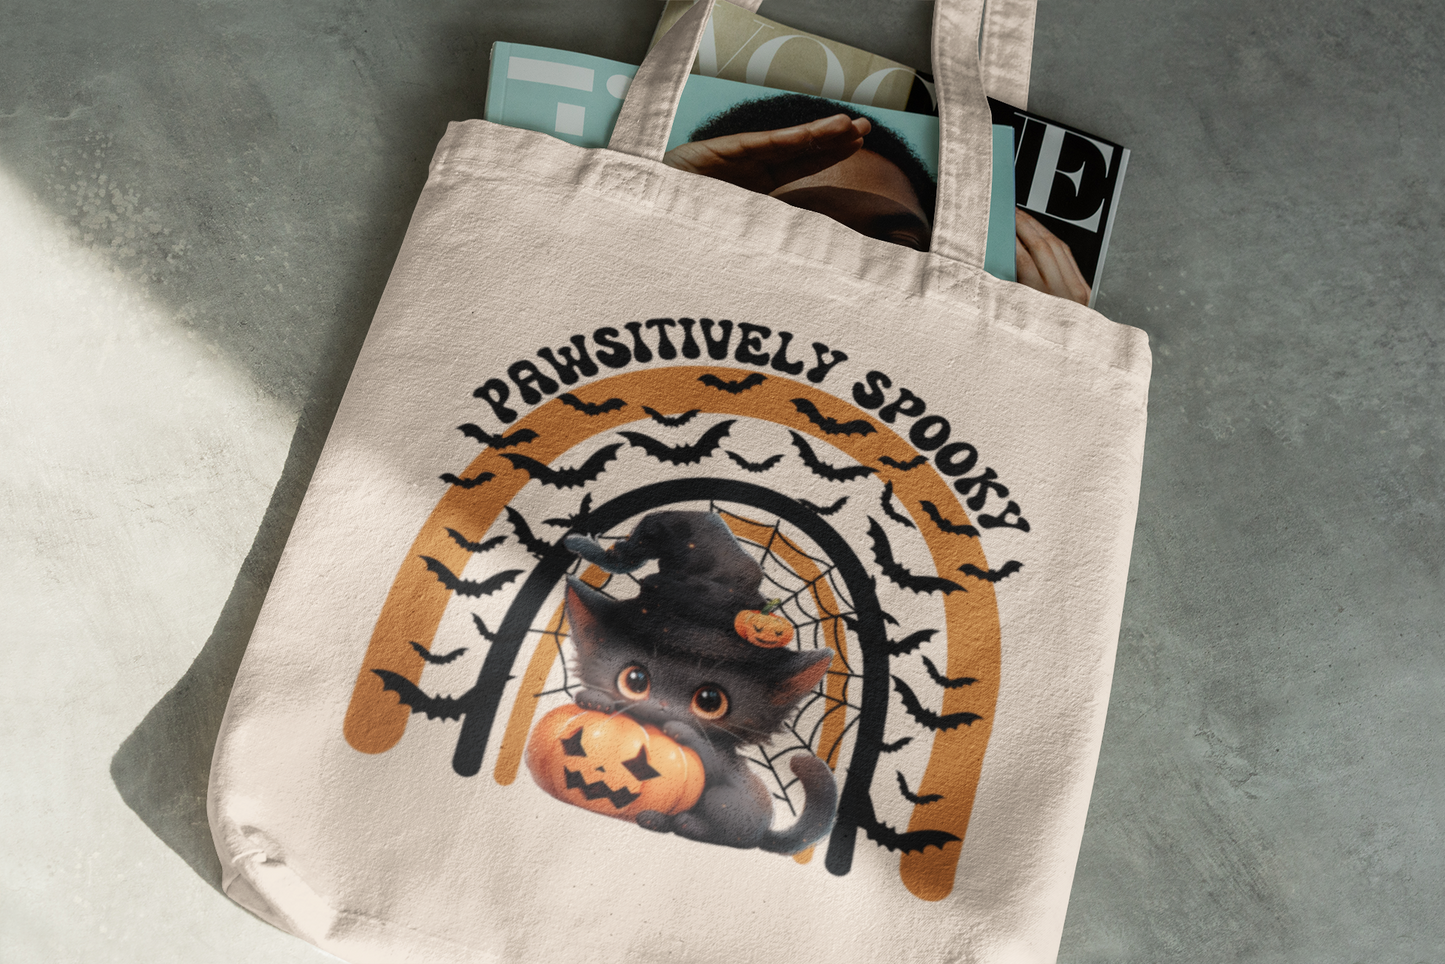 Halloween Cat Tote Bag, Funny Halloween Canvas Tote Bag Halloween Black Cat Pumpkin Tote Bag Trick or Treat Halloween Goodie Bag